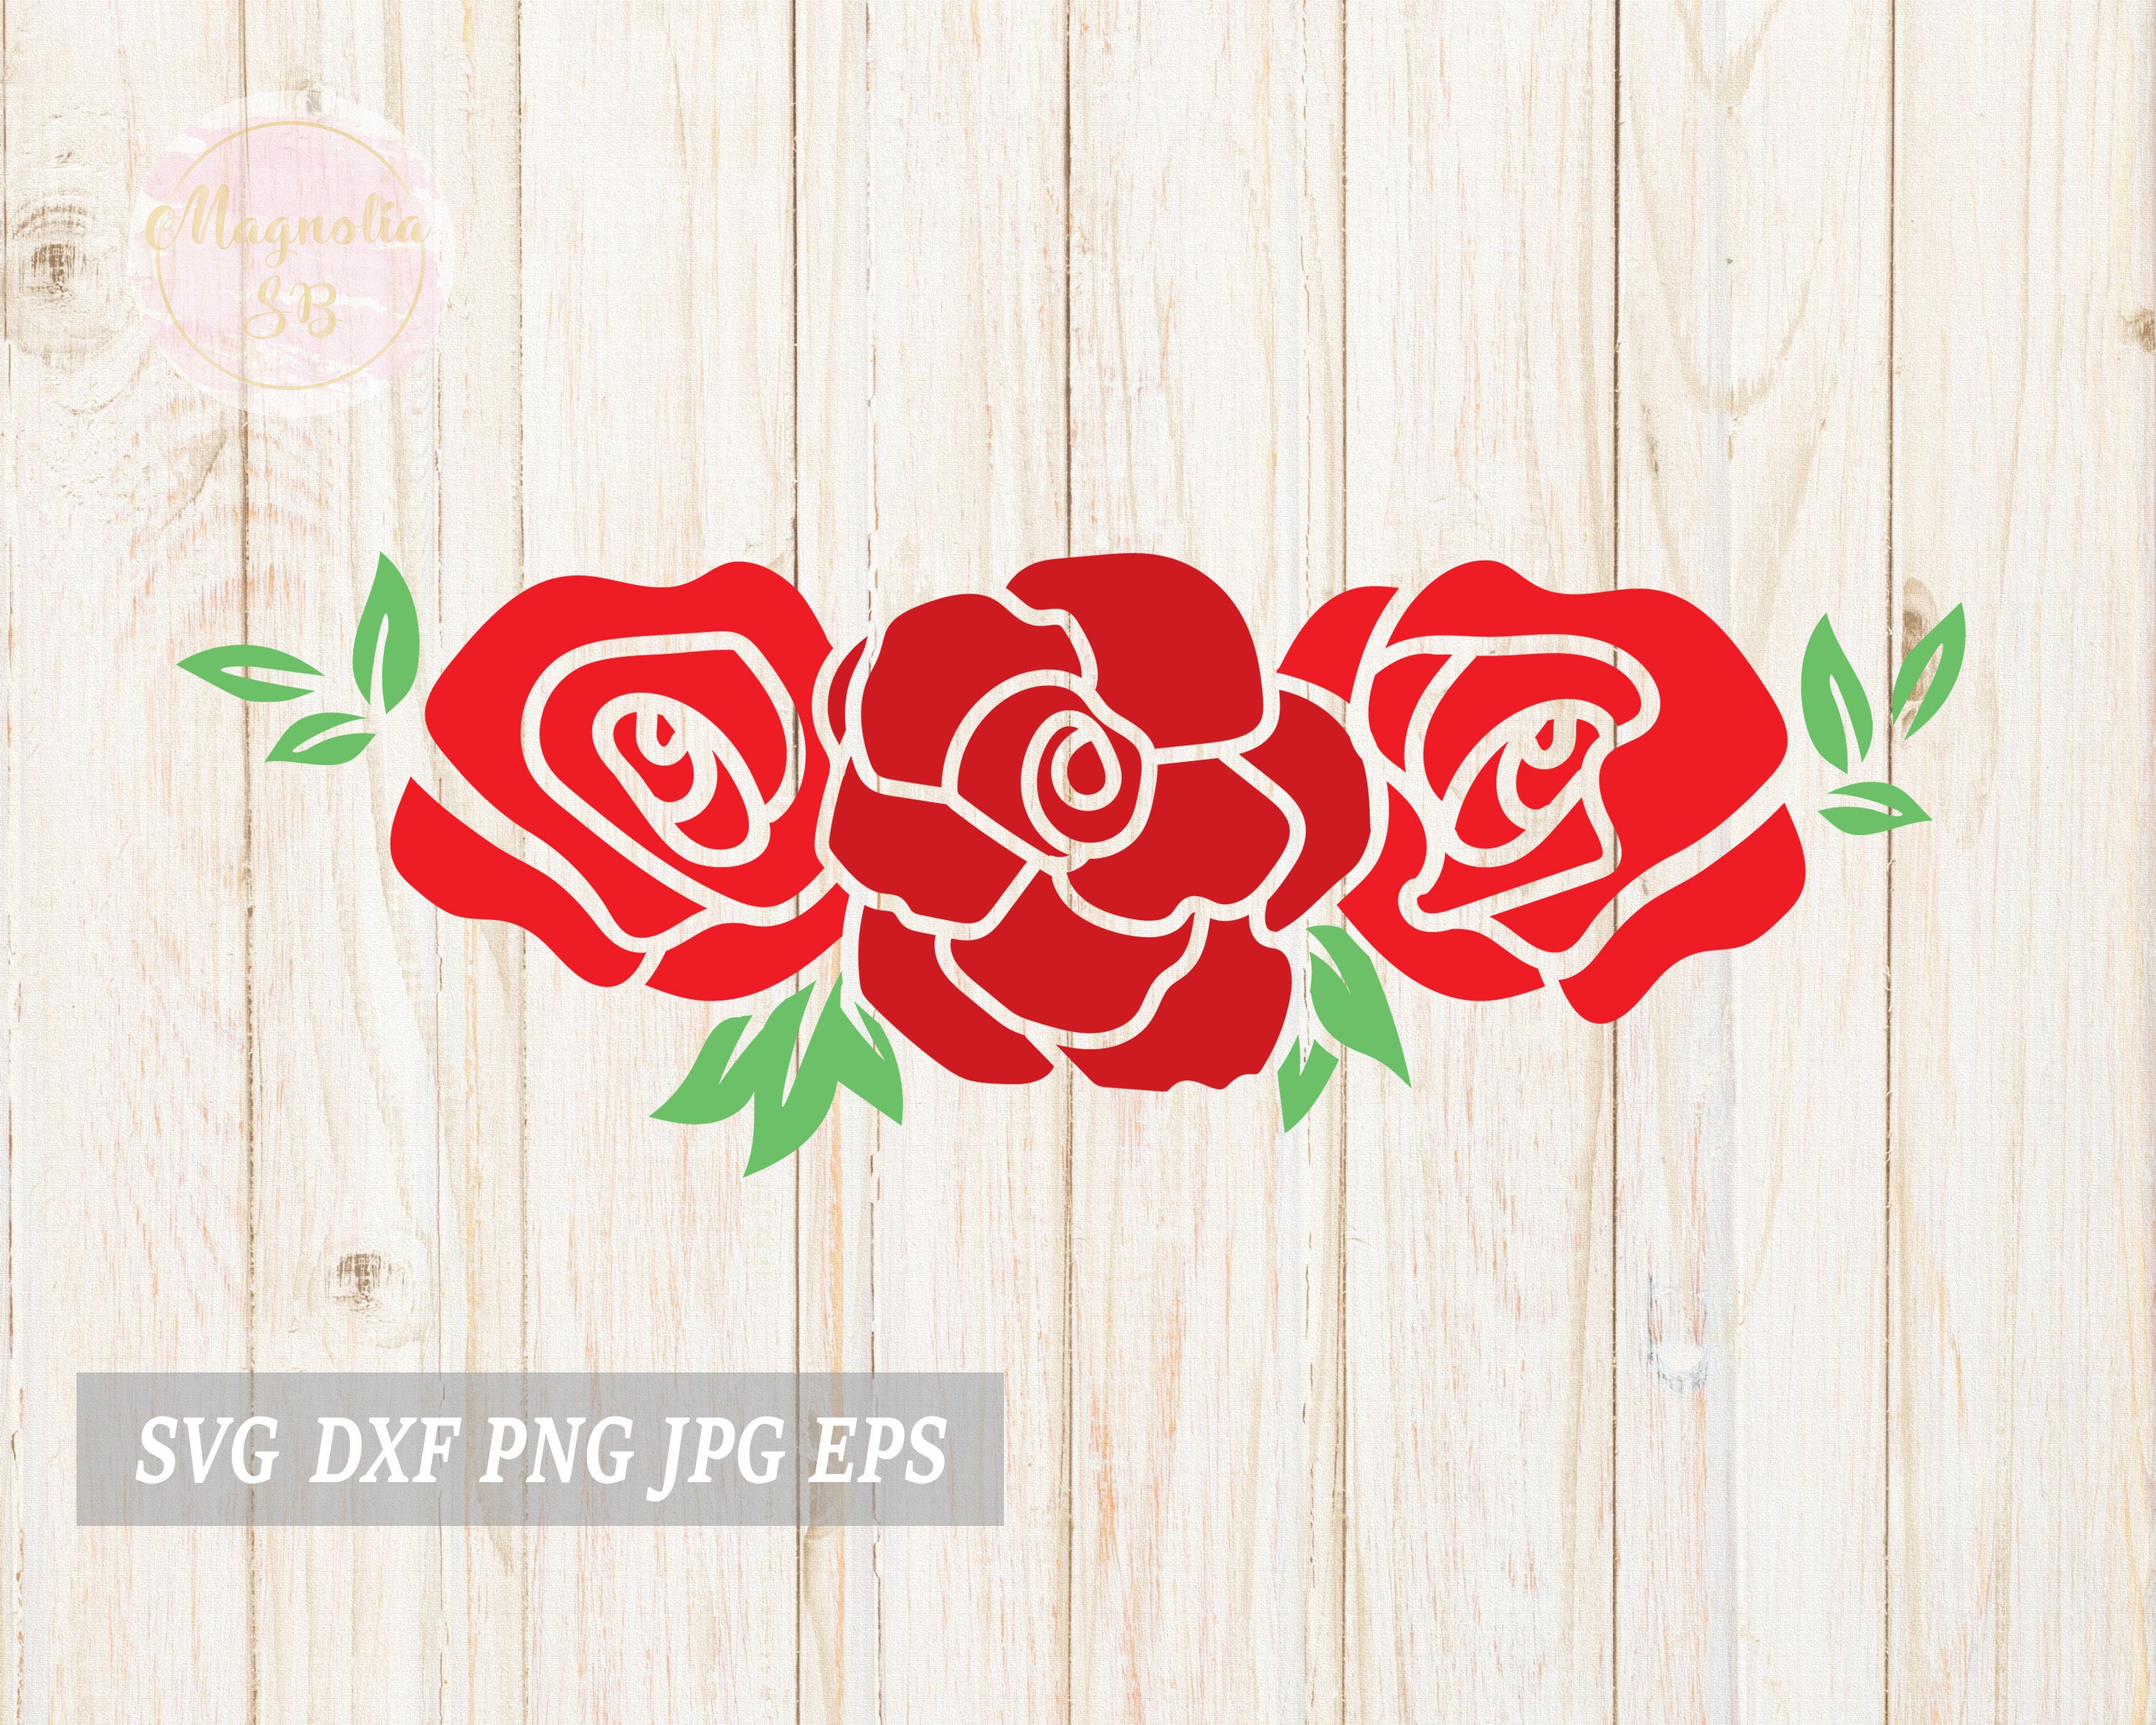 Cricut Decorative Window Cling, Red Rock Rose Designs – Rock Rose Designs